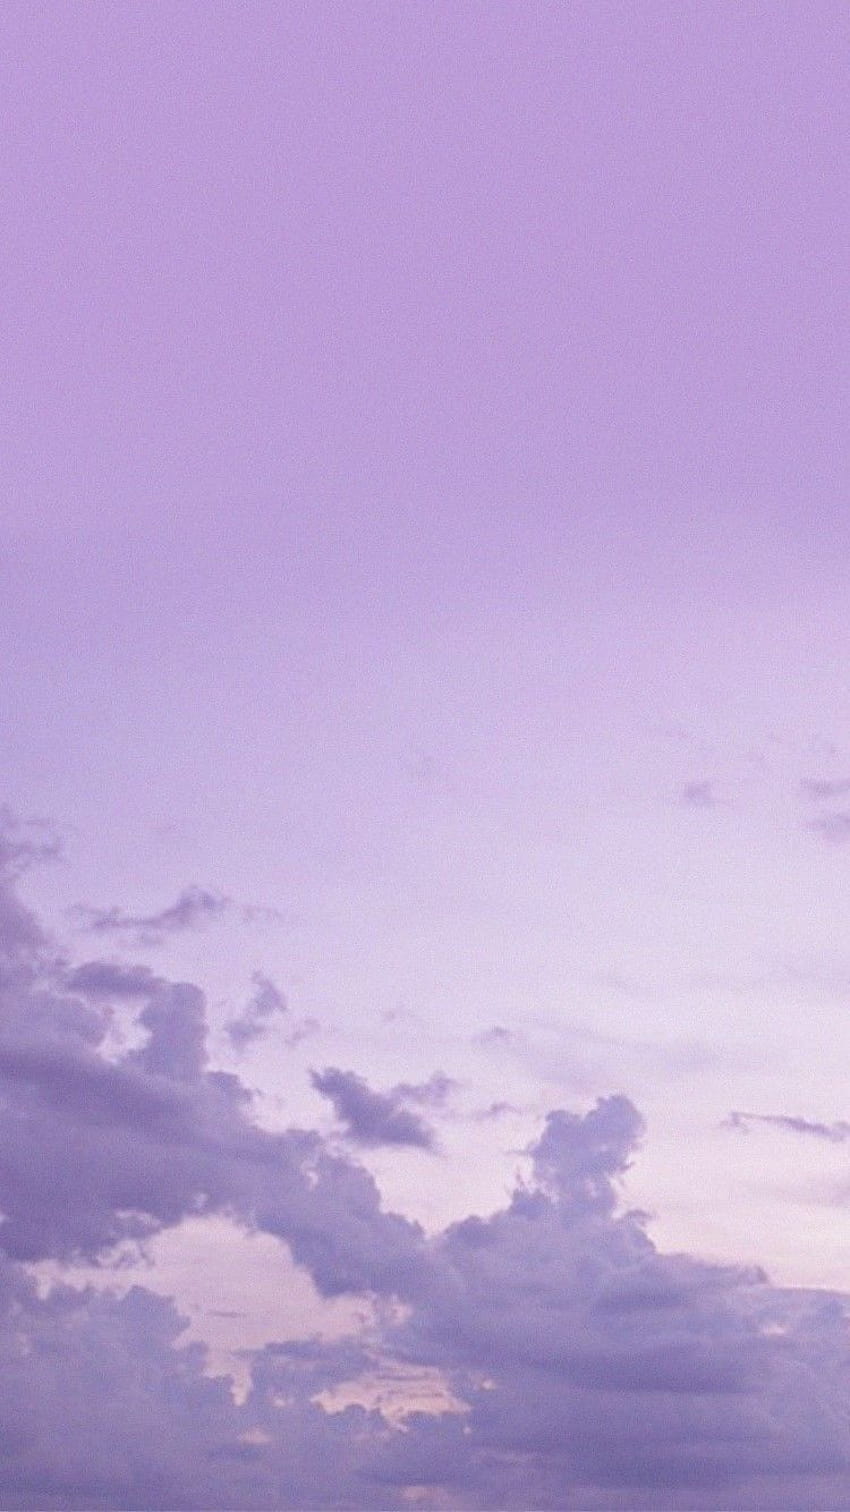 Aesthetic background purple sky with clouds - Pastel purple, pastel, lavender, light purple